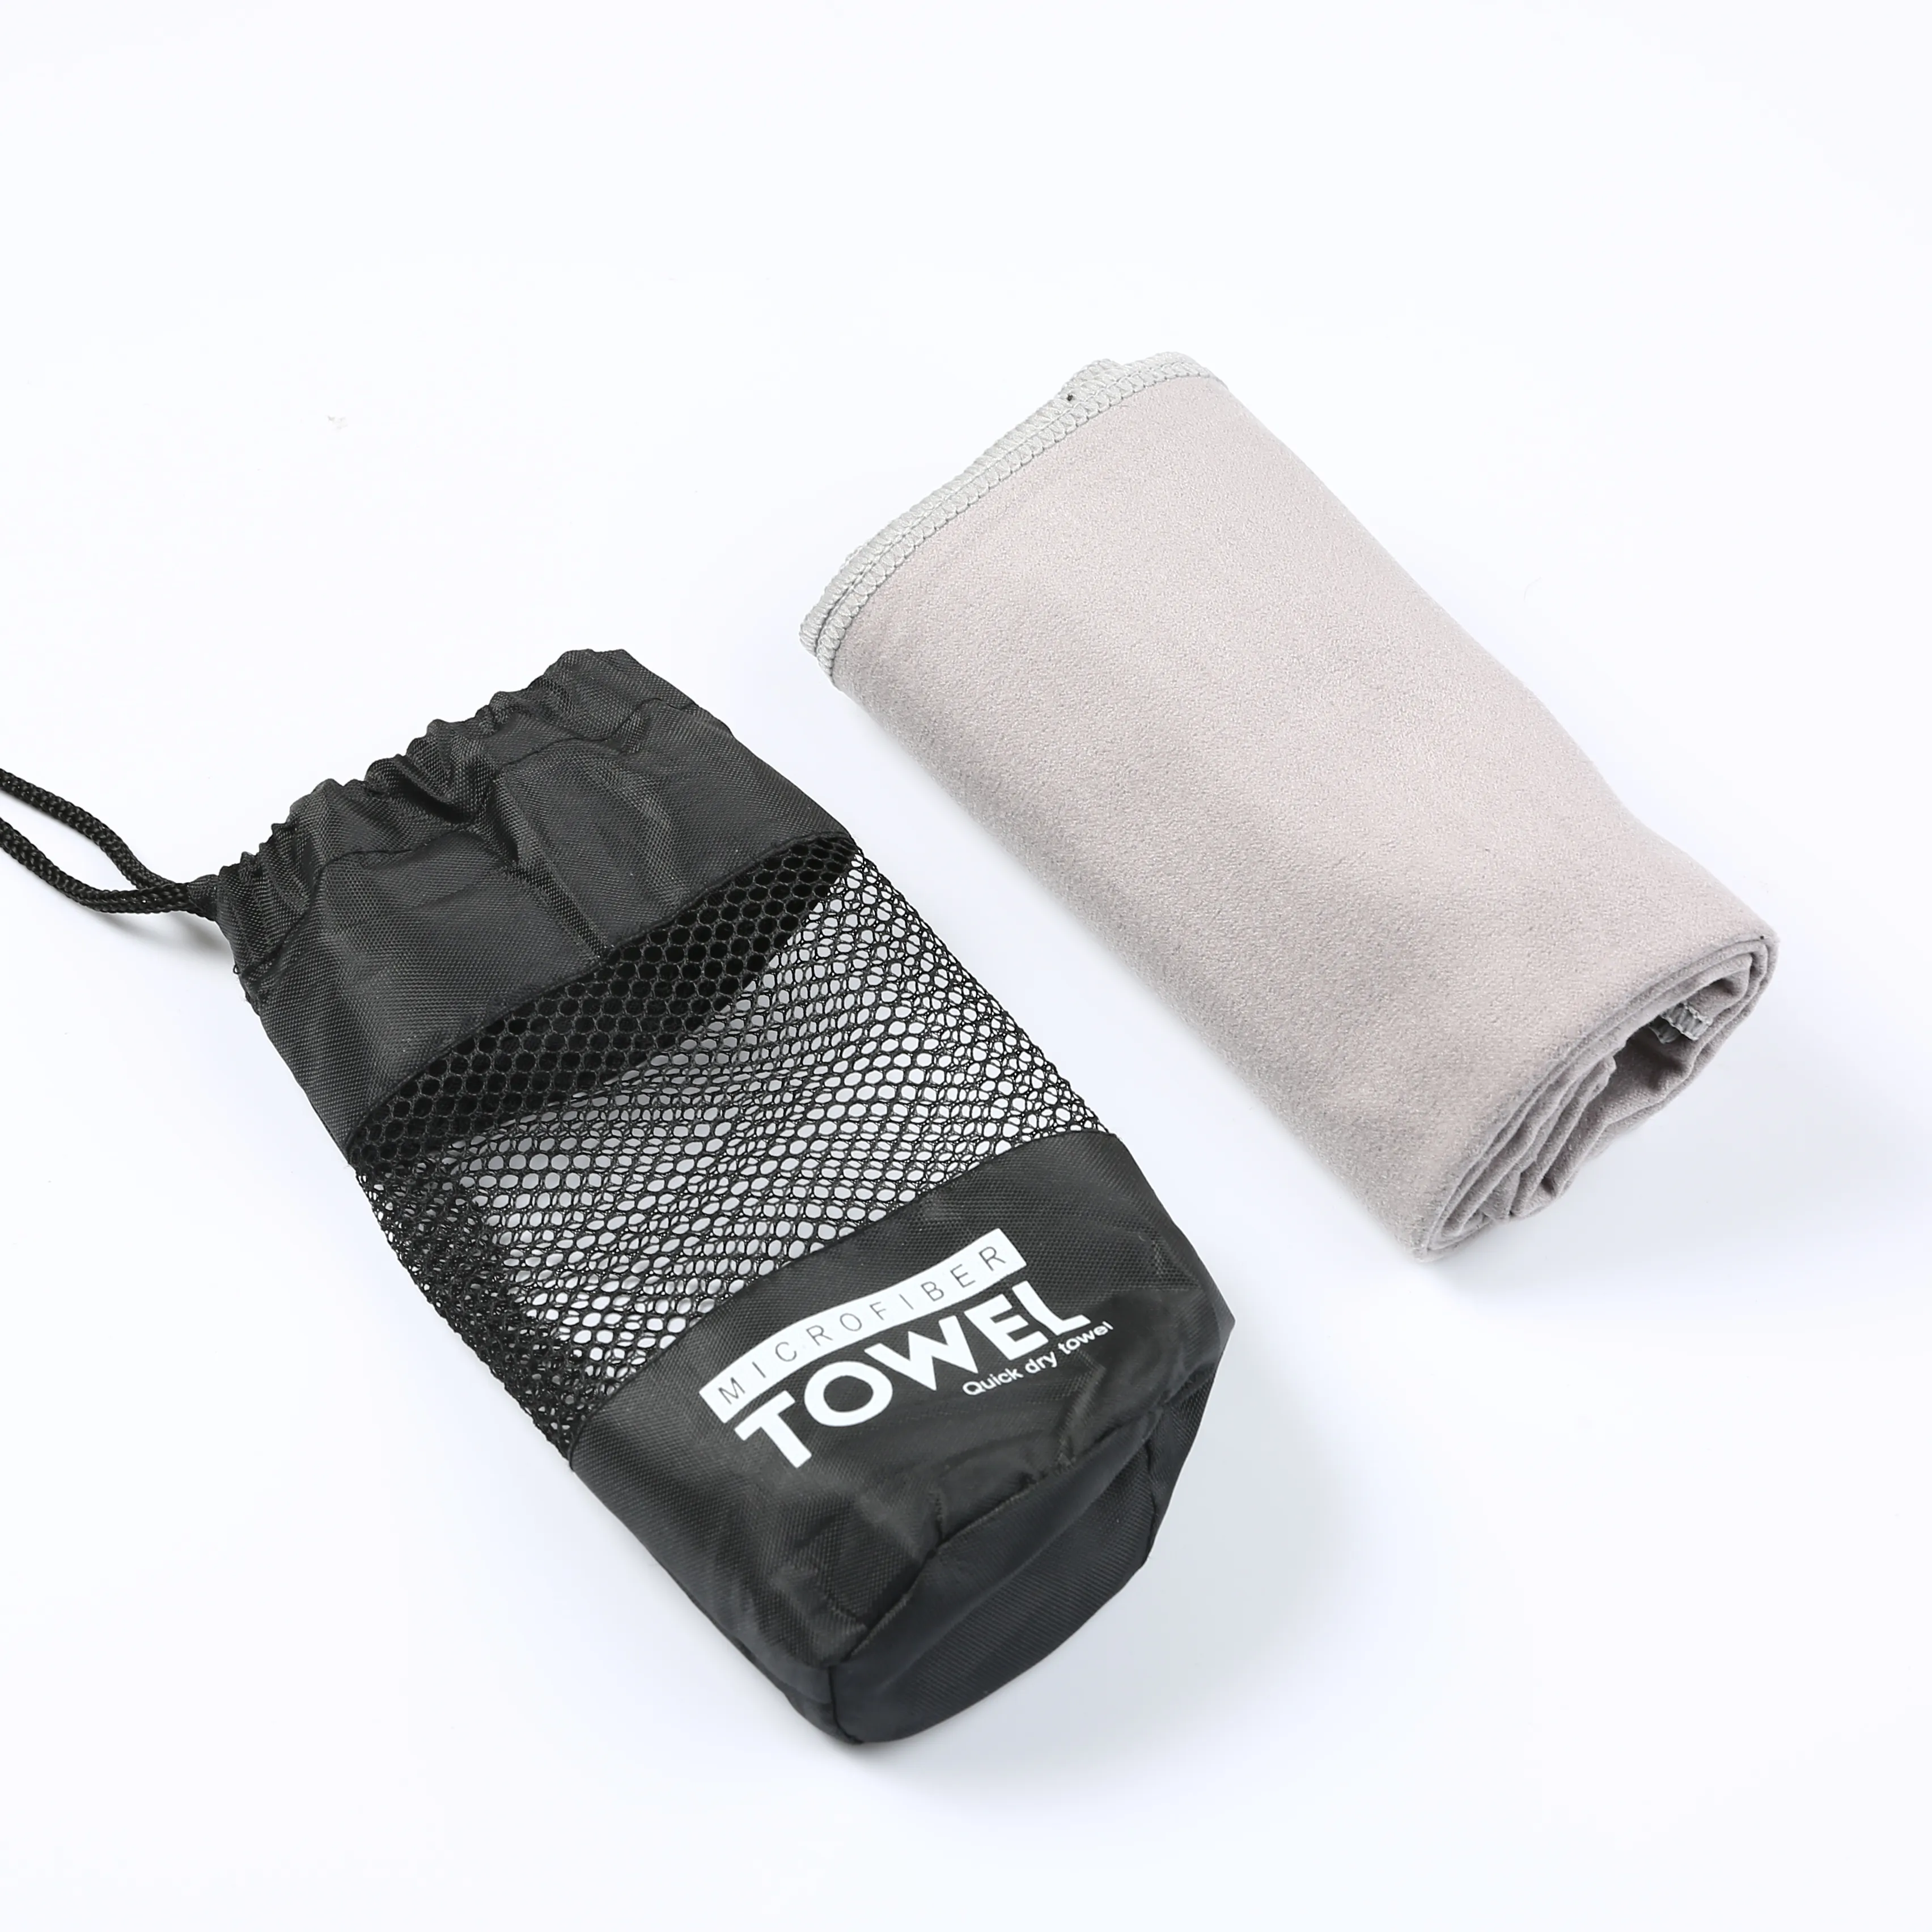 Kocean Rainleaf Microfiber Towel Perfect Sports & Travel Towel. Fast Drying - Super Absorbent